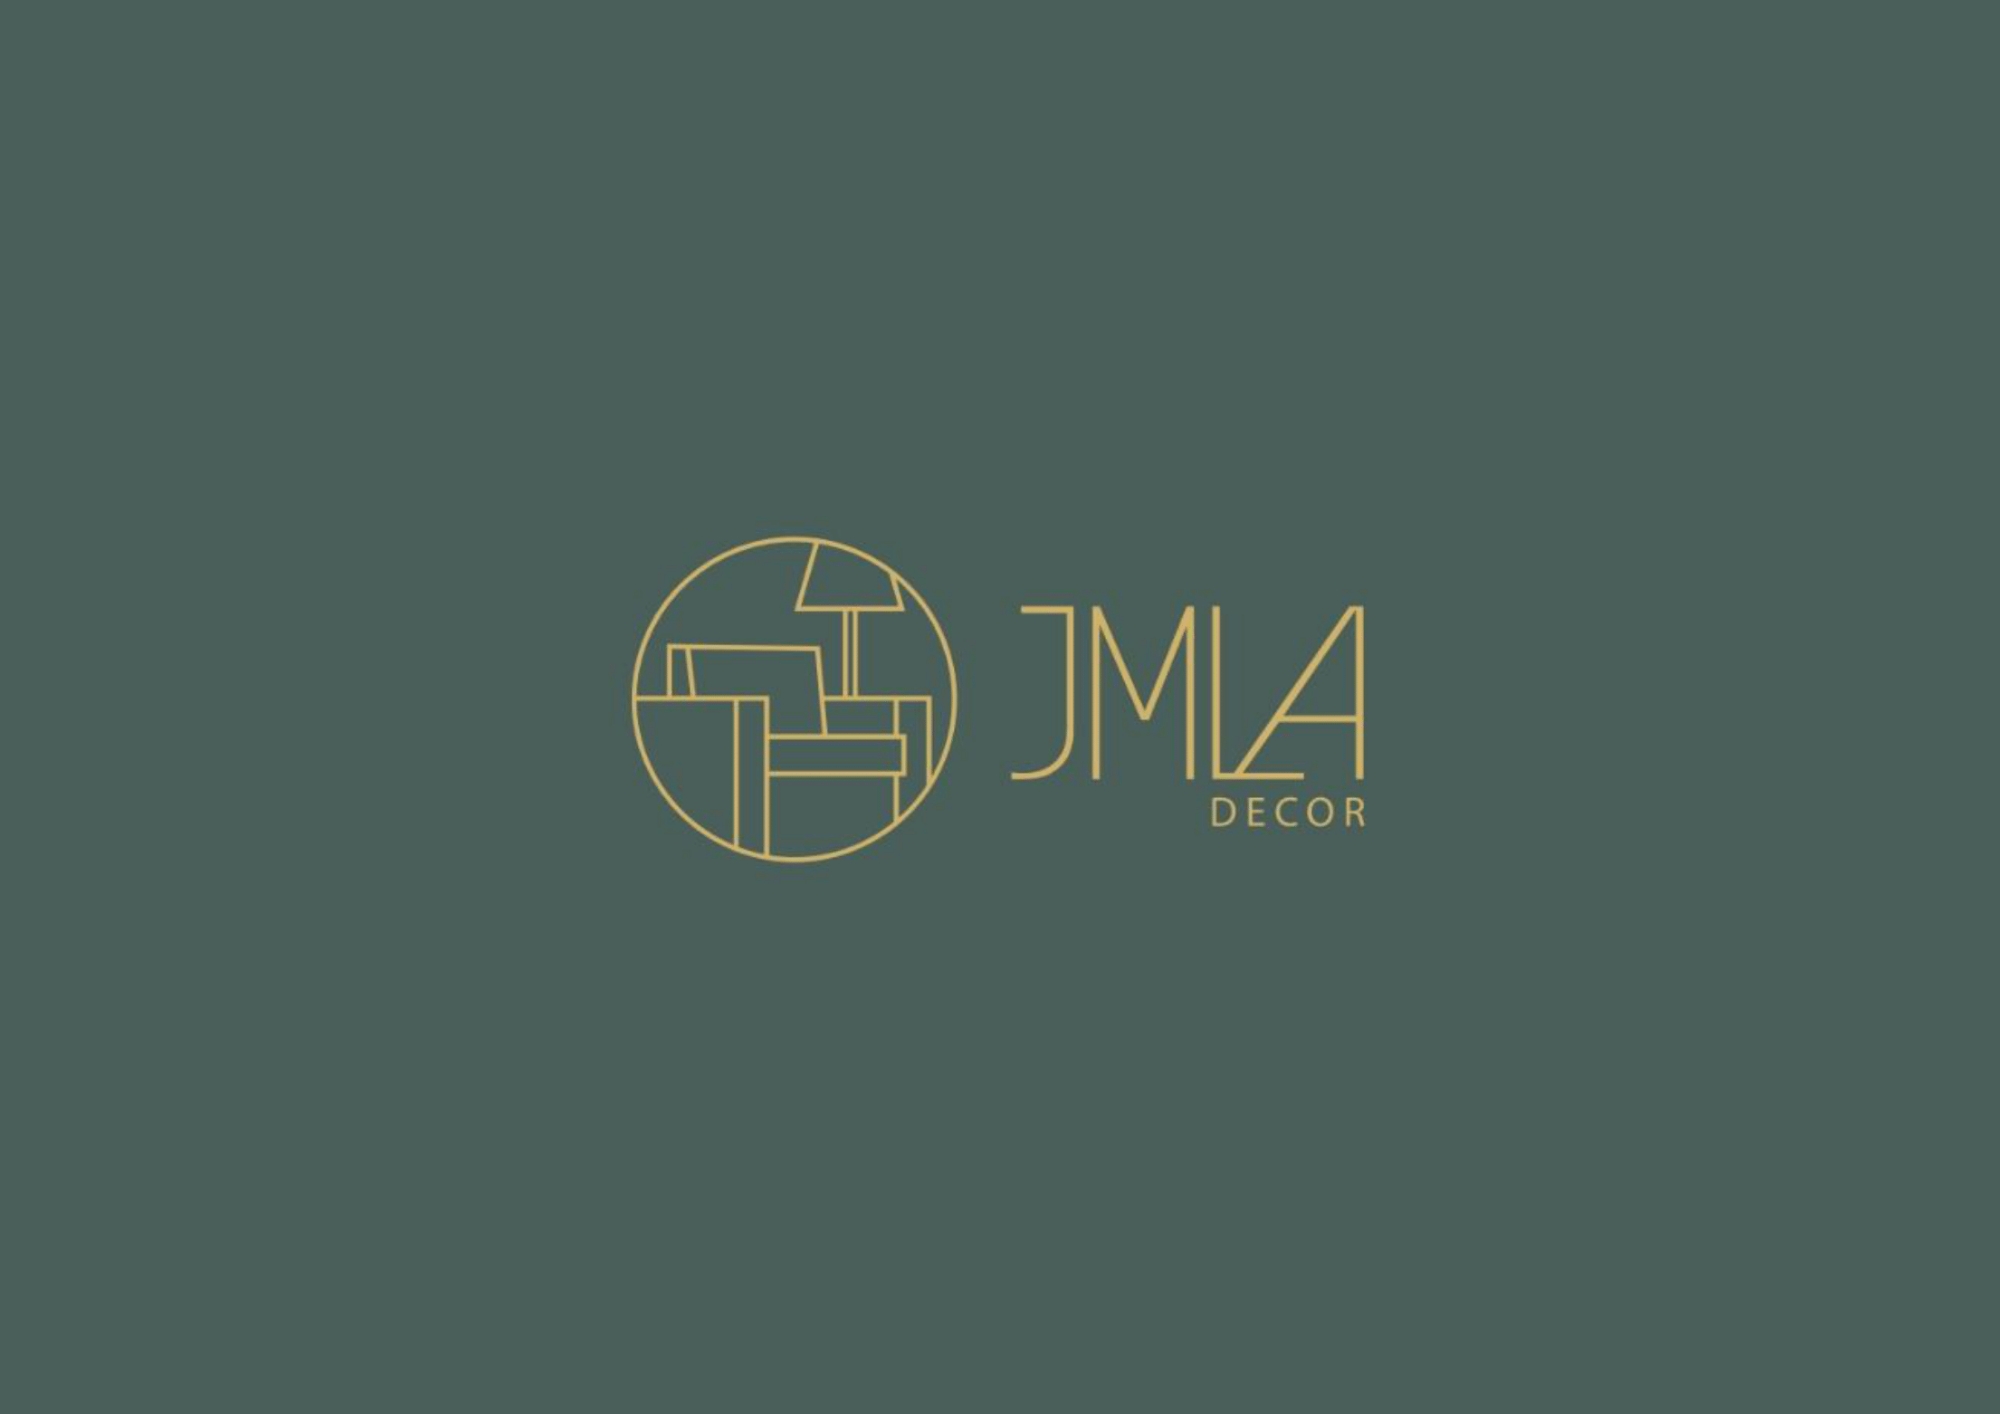 Logo JMLA Decor